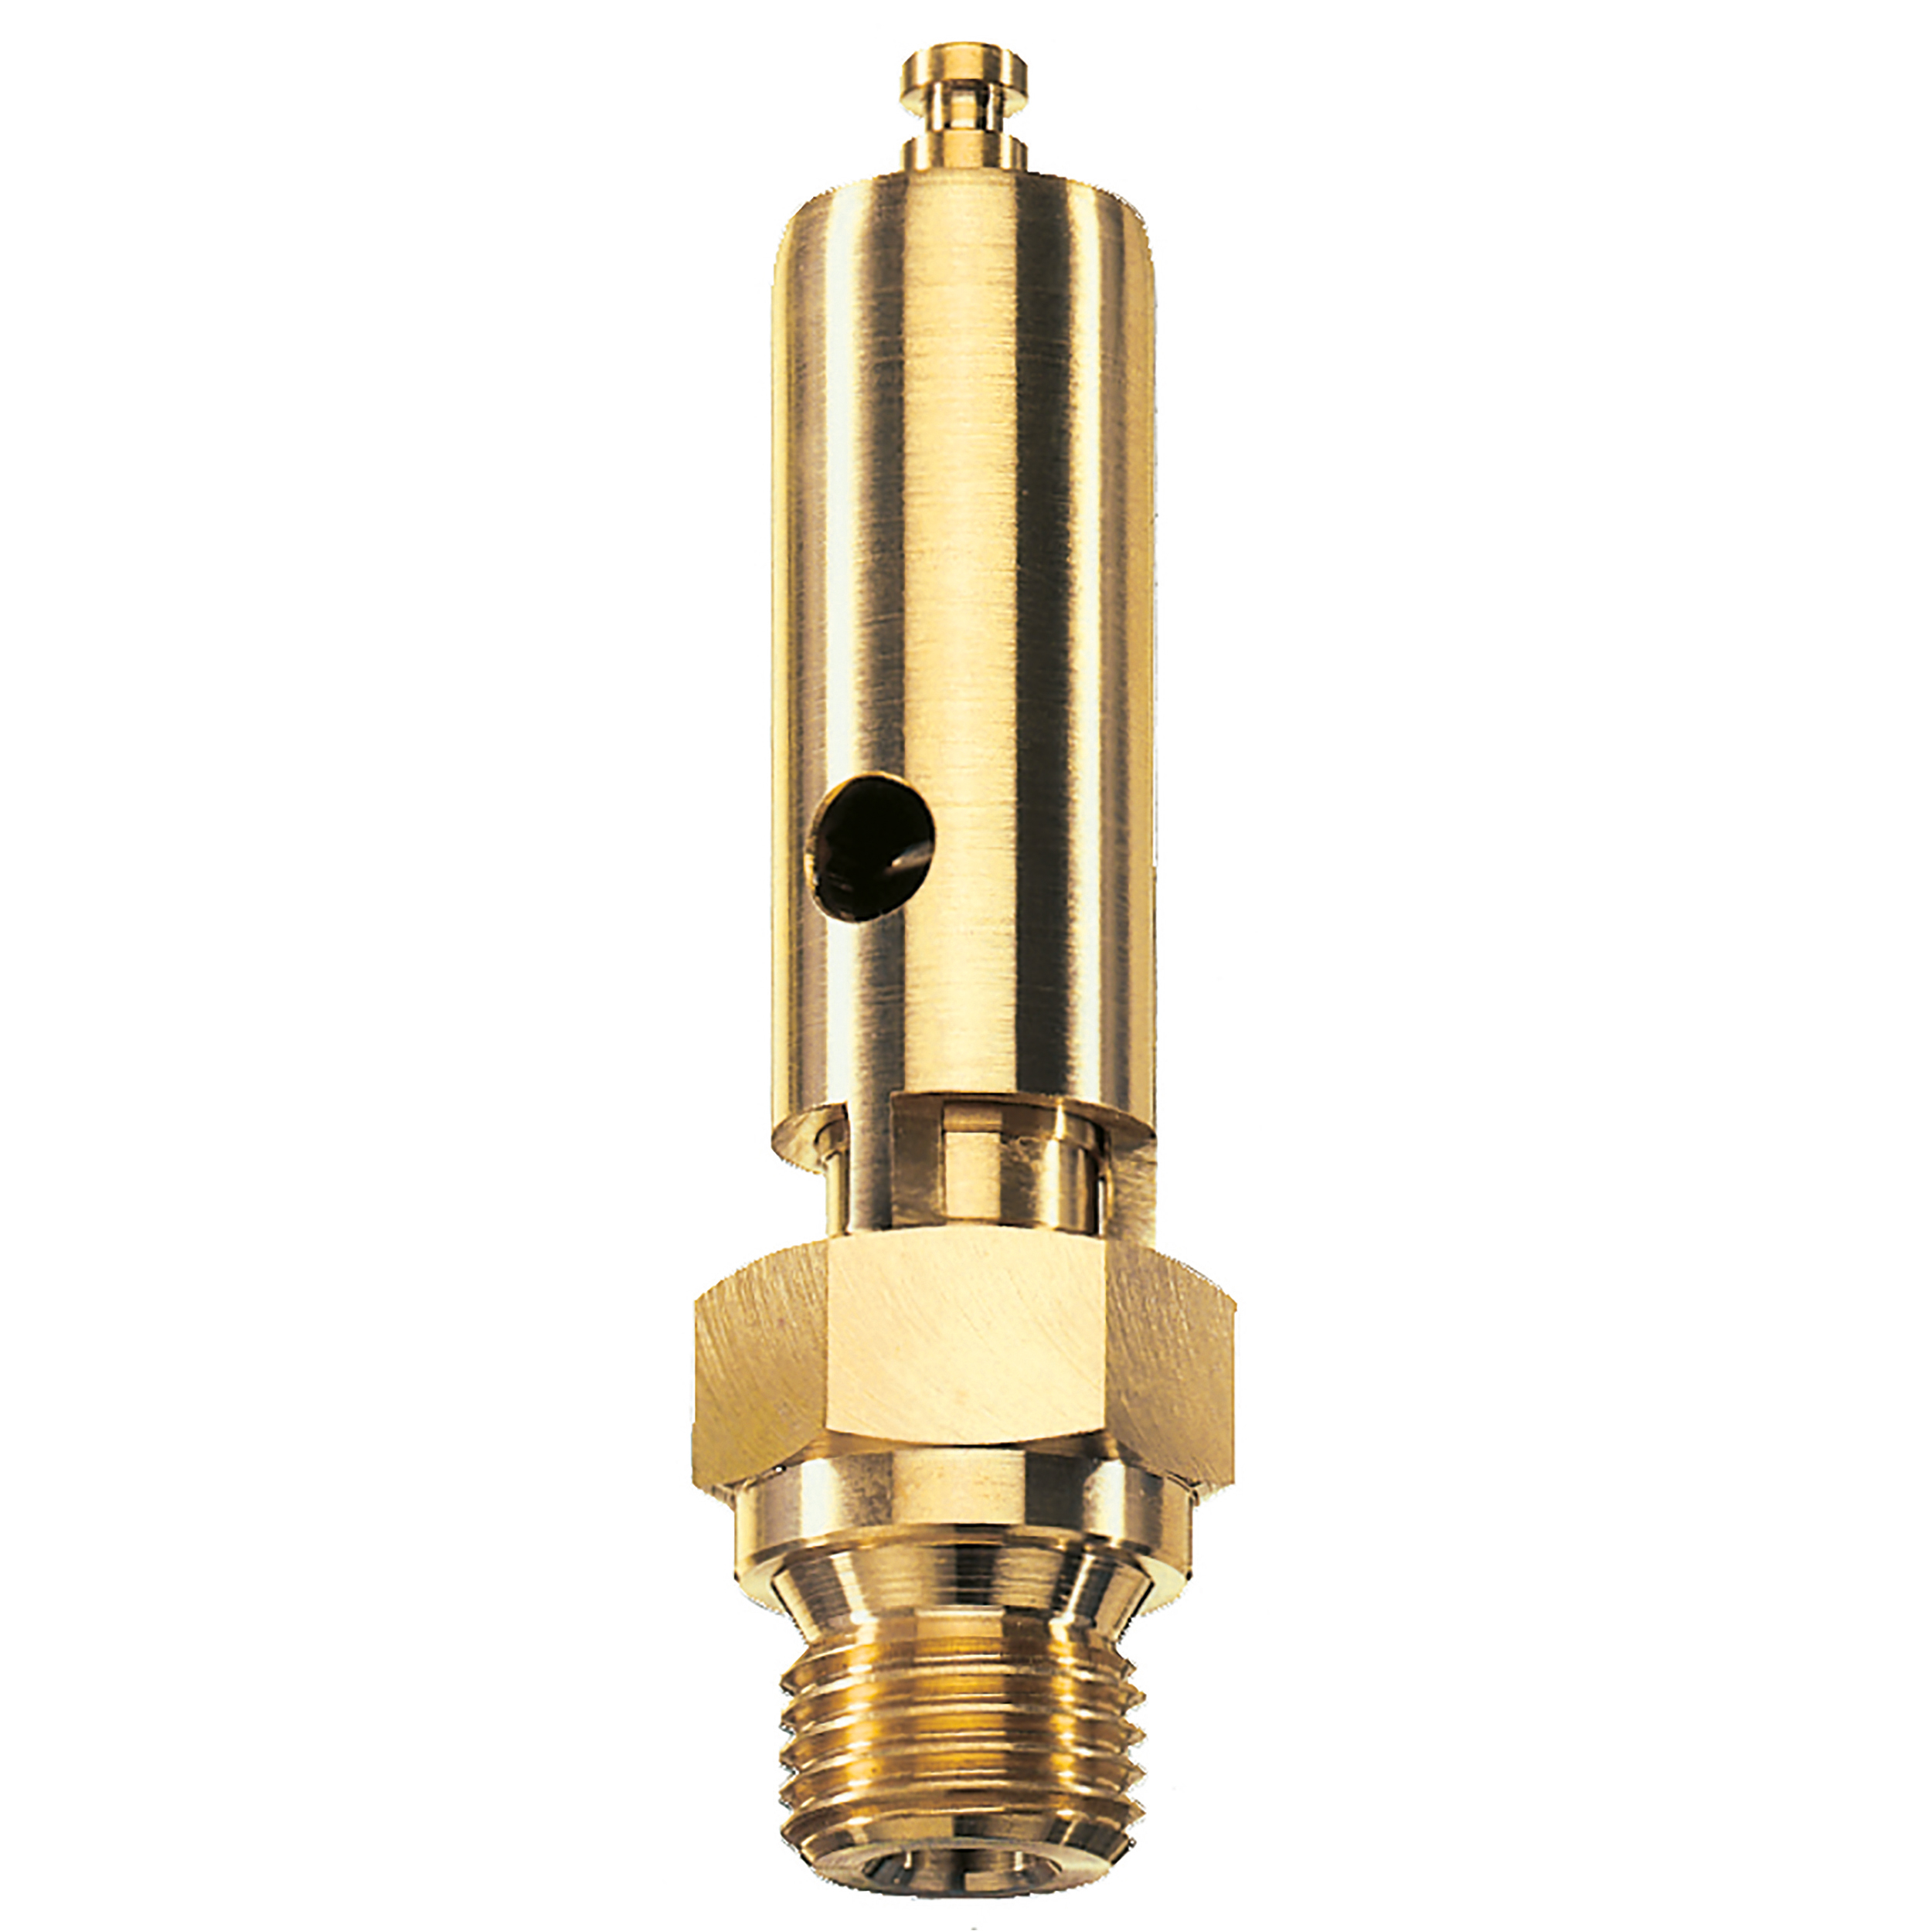 Component-tested safety valve DN 6, G¼, pressure: 7.1-10 bar